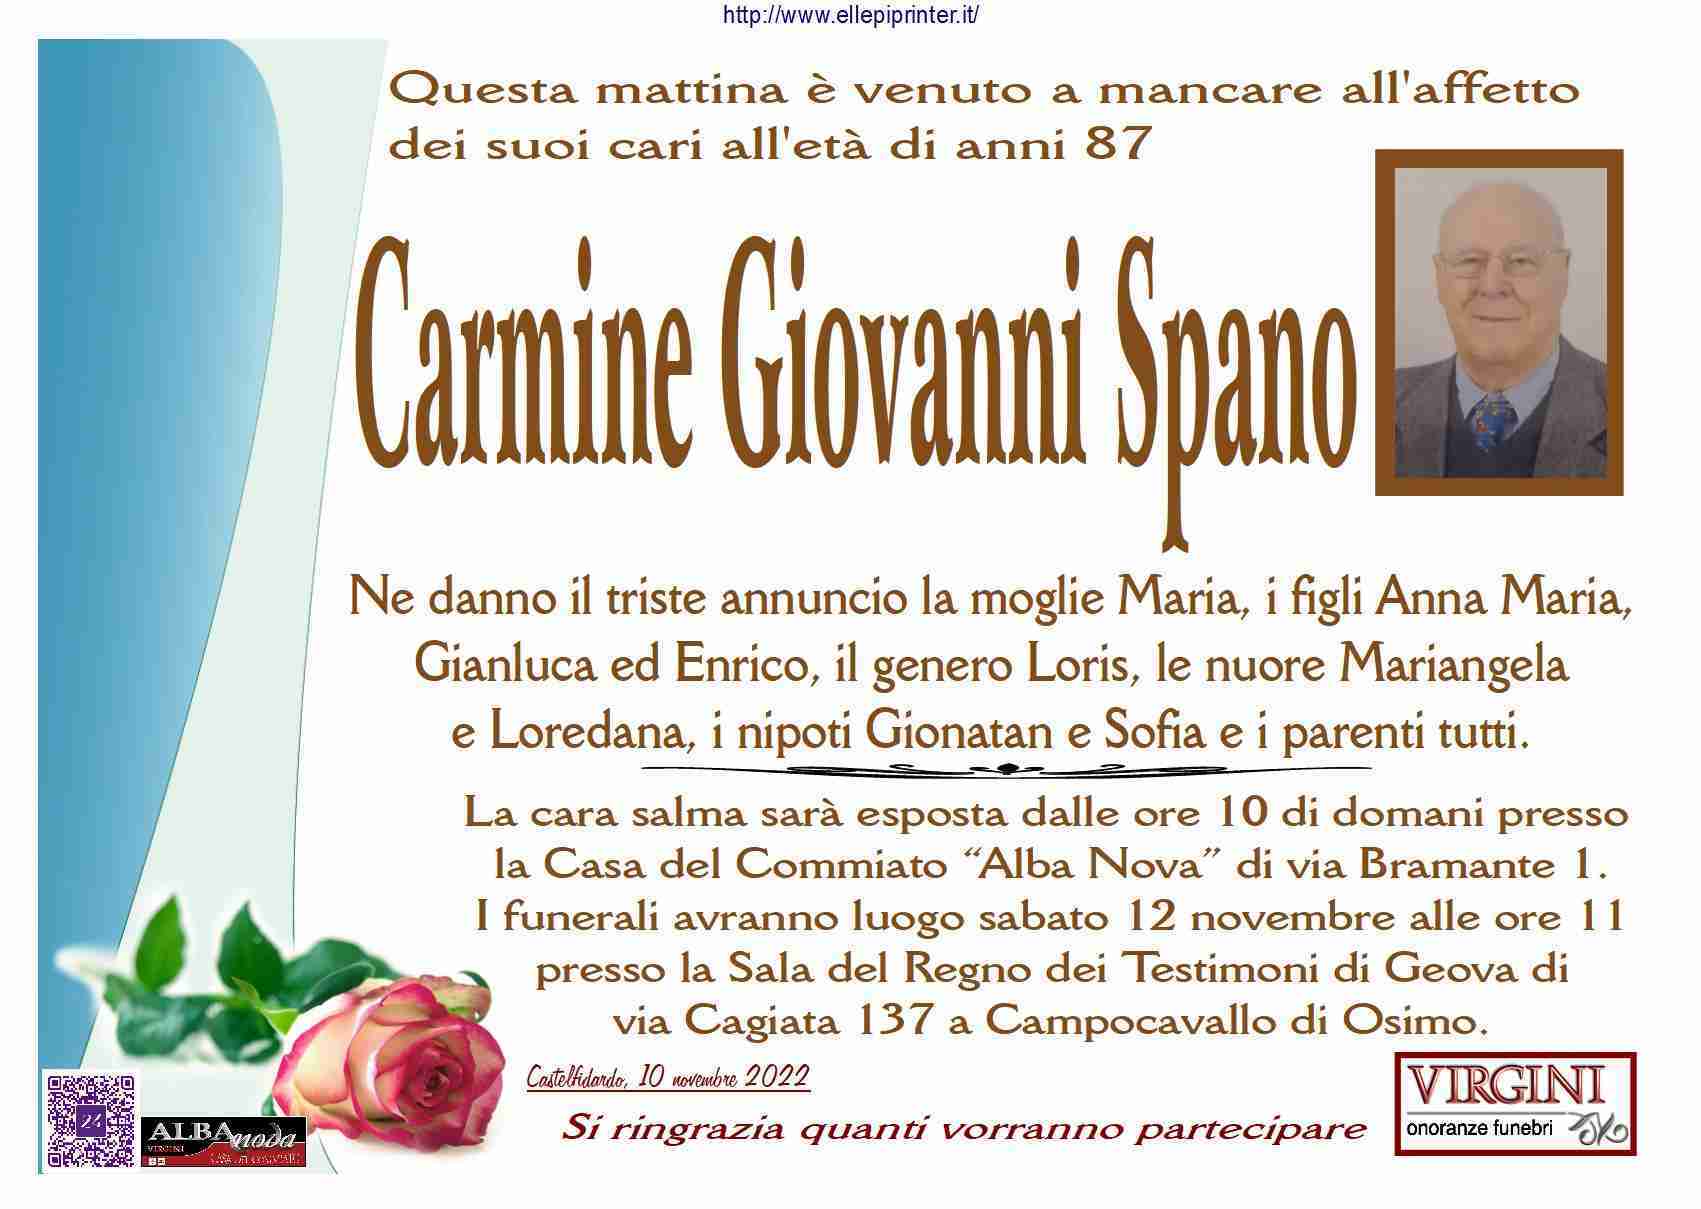 Carmine Giovanni Spano